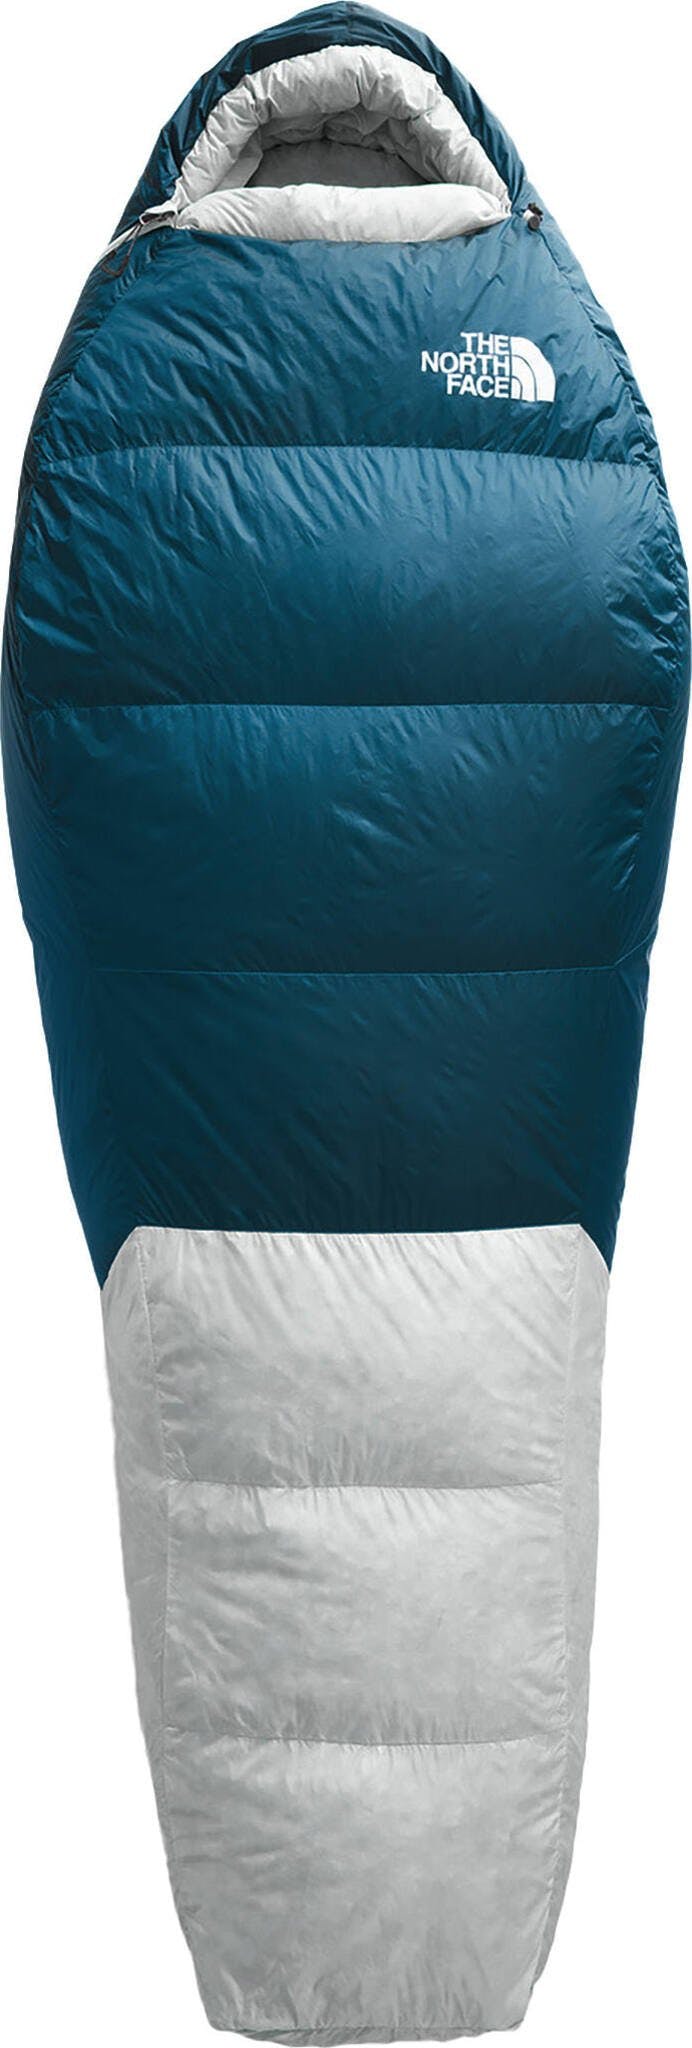 Product image for Blue Kazoo Eco Down 20°F/-7°C Sleeping Bag - Unisex